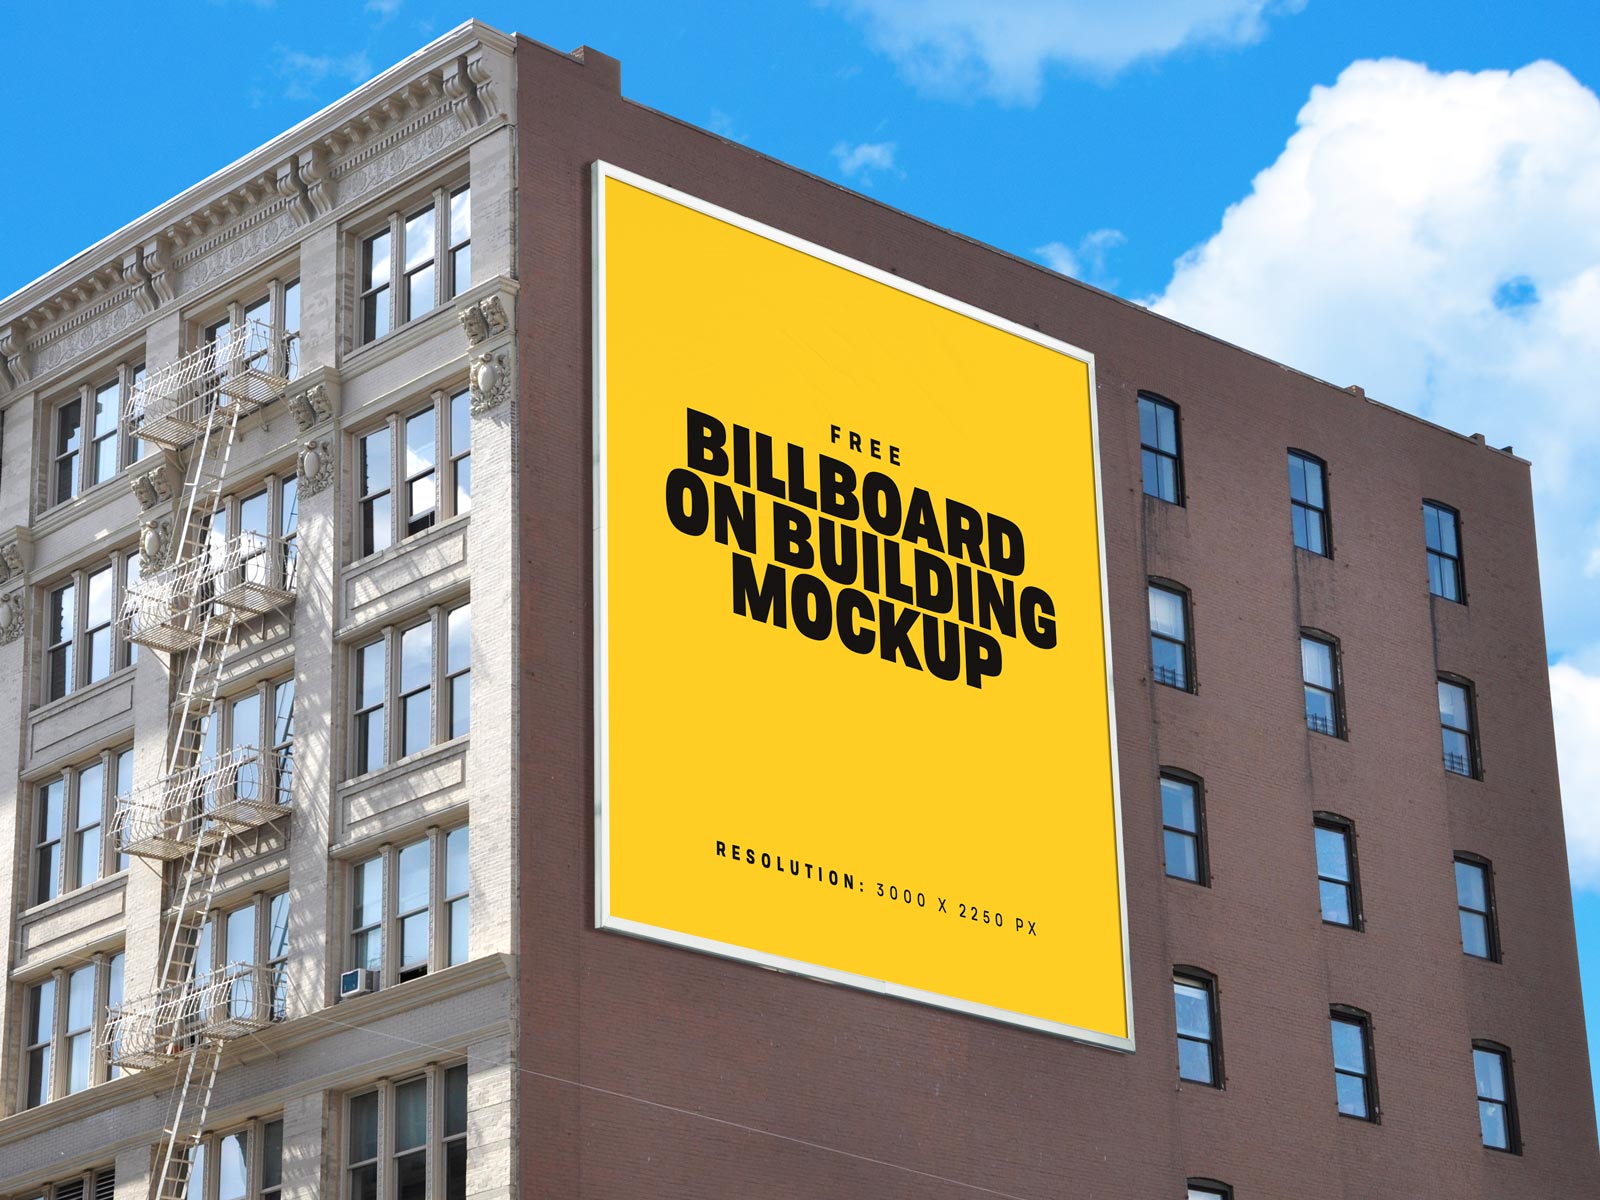 free-building-billboard-mockup-psd-designbolts